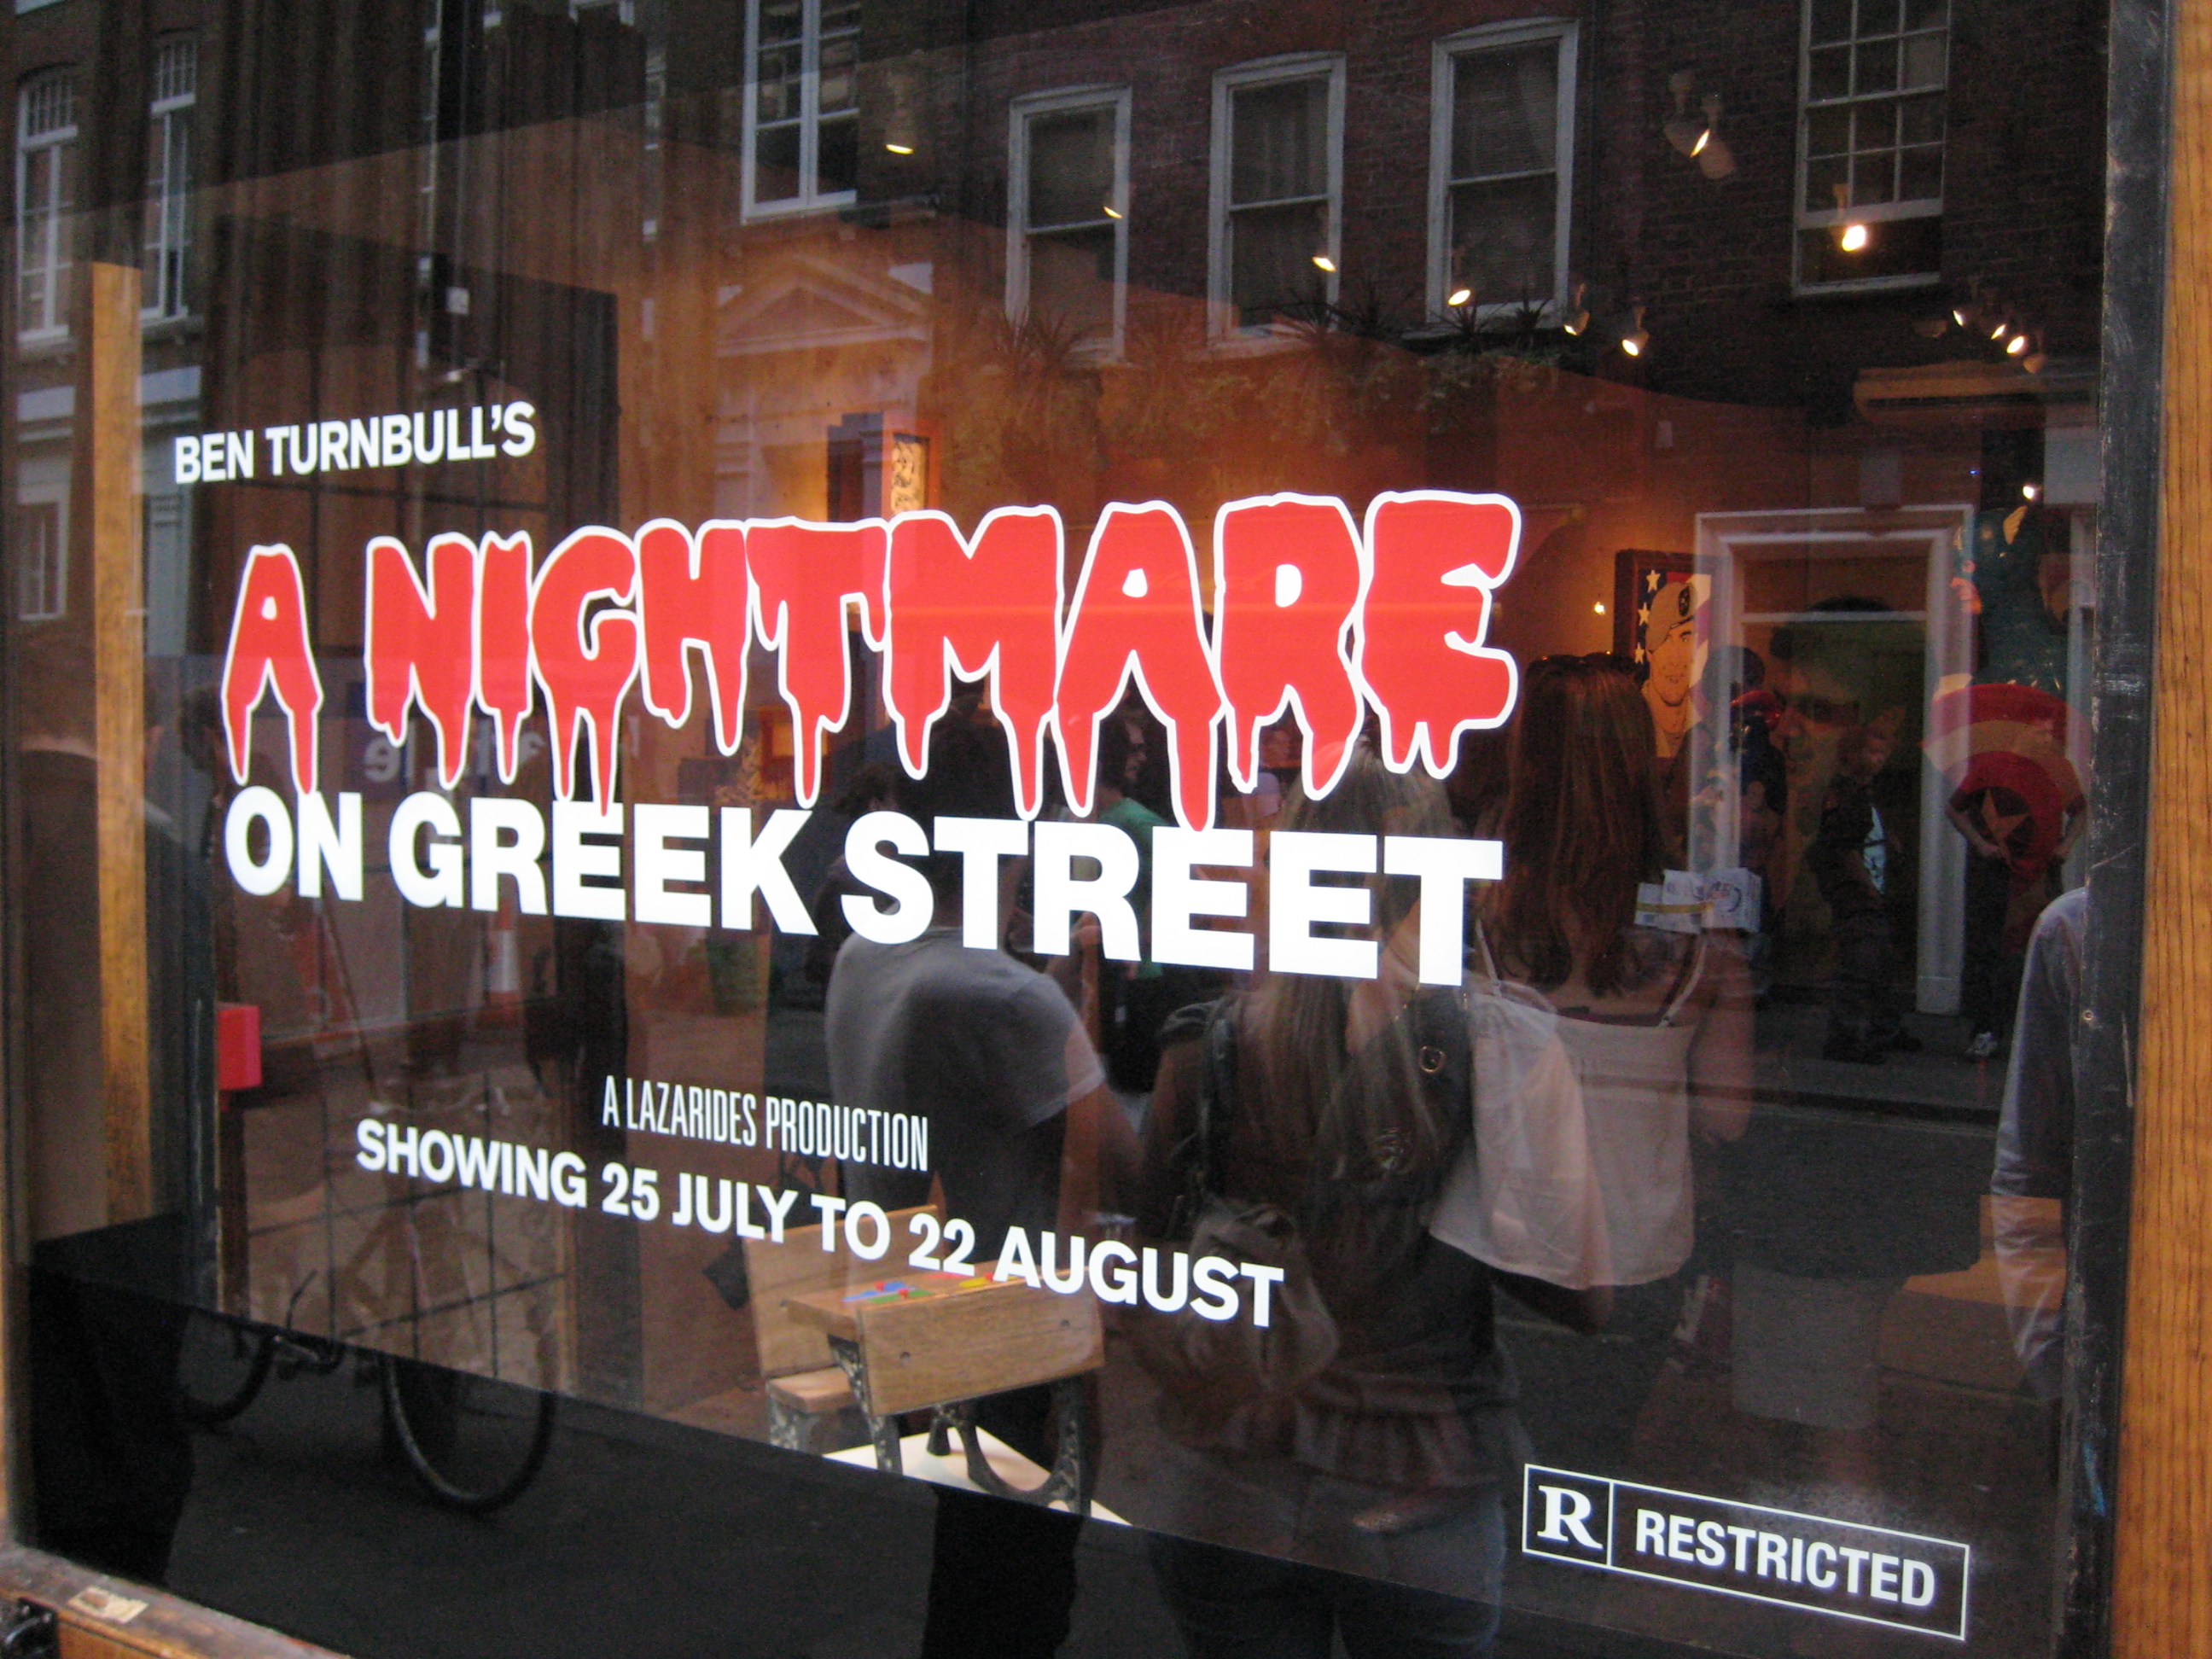 Gallery: Ben Turnbull presents "A Nightmare on Greek Street"